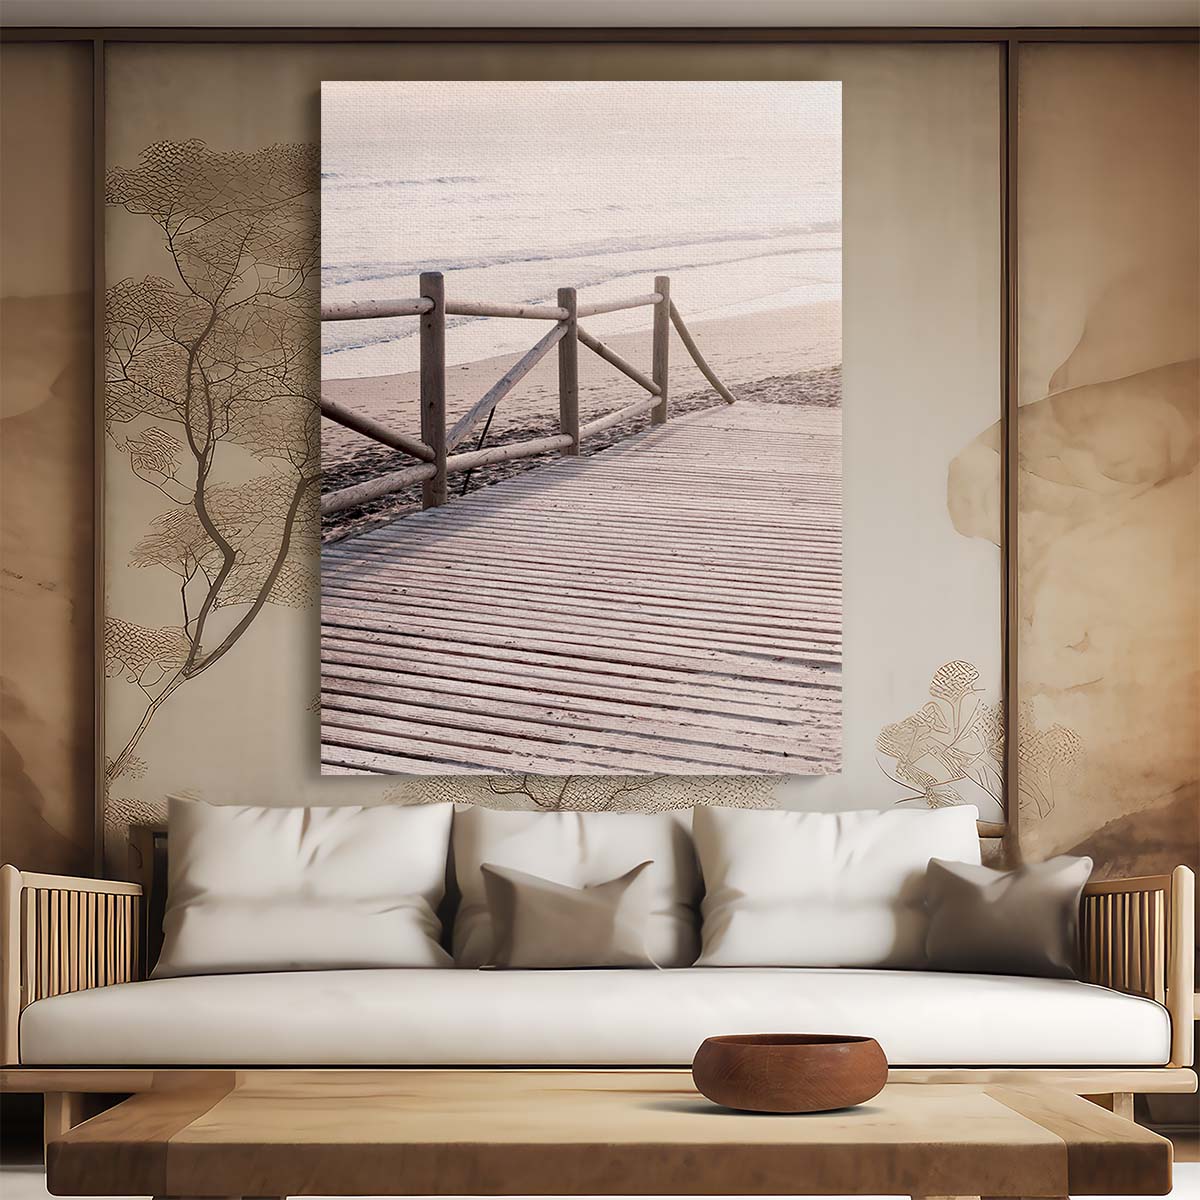 Coastal Landscape Photography Beach, Sea, Sand, Boardwalk Seascape by Luxuriance Designs, made in USA